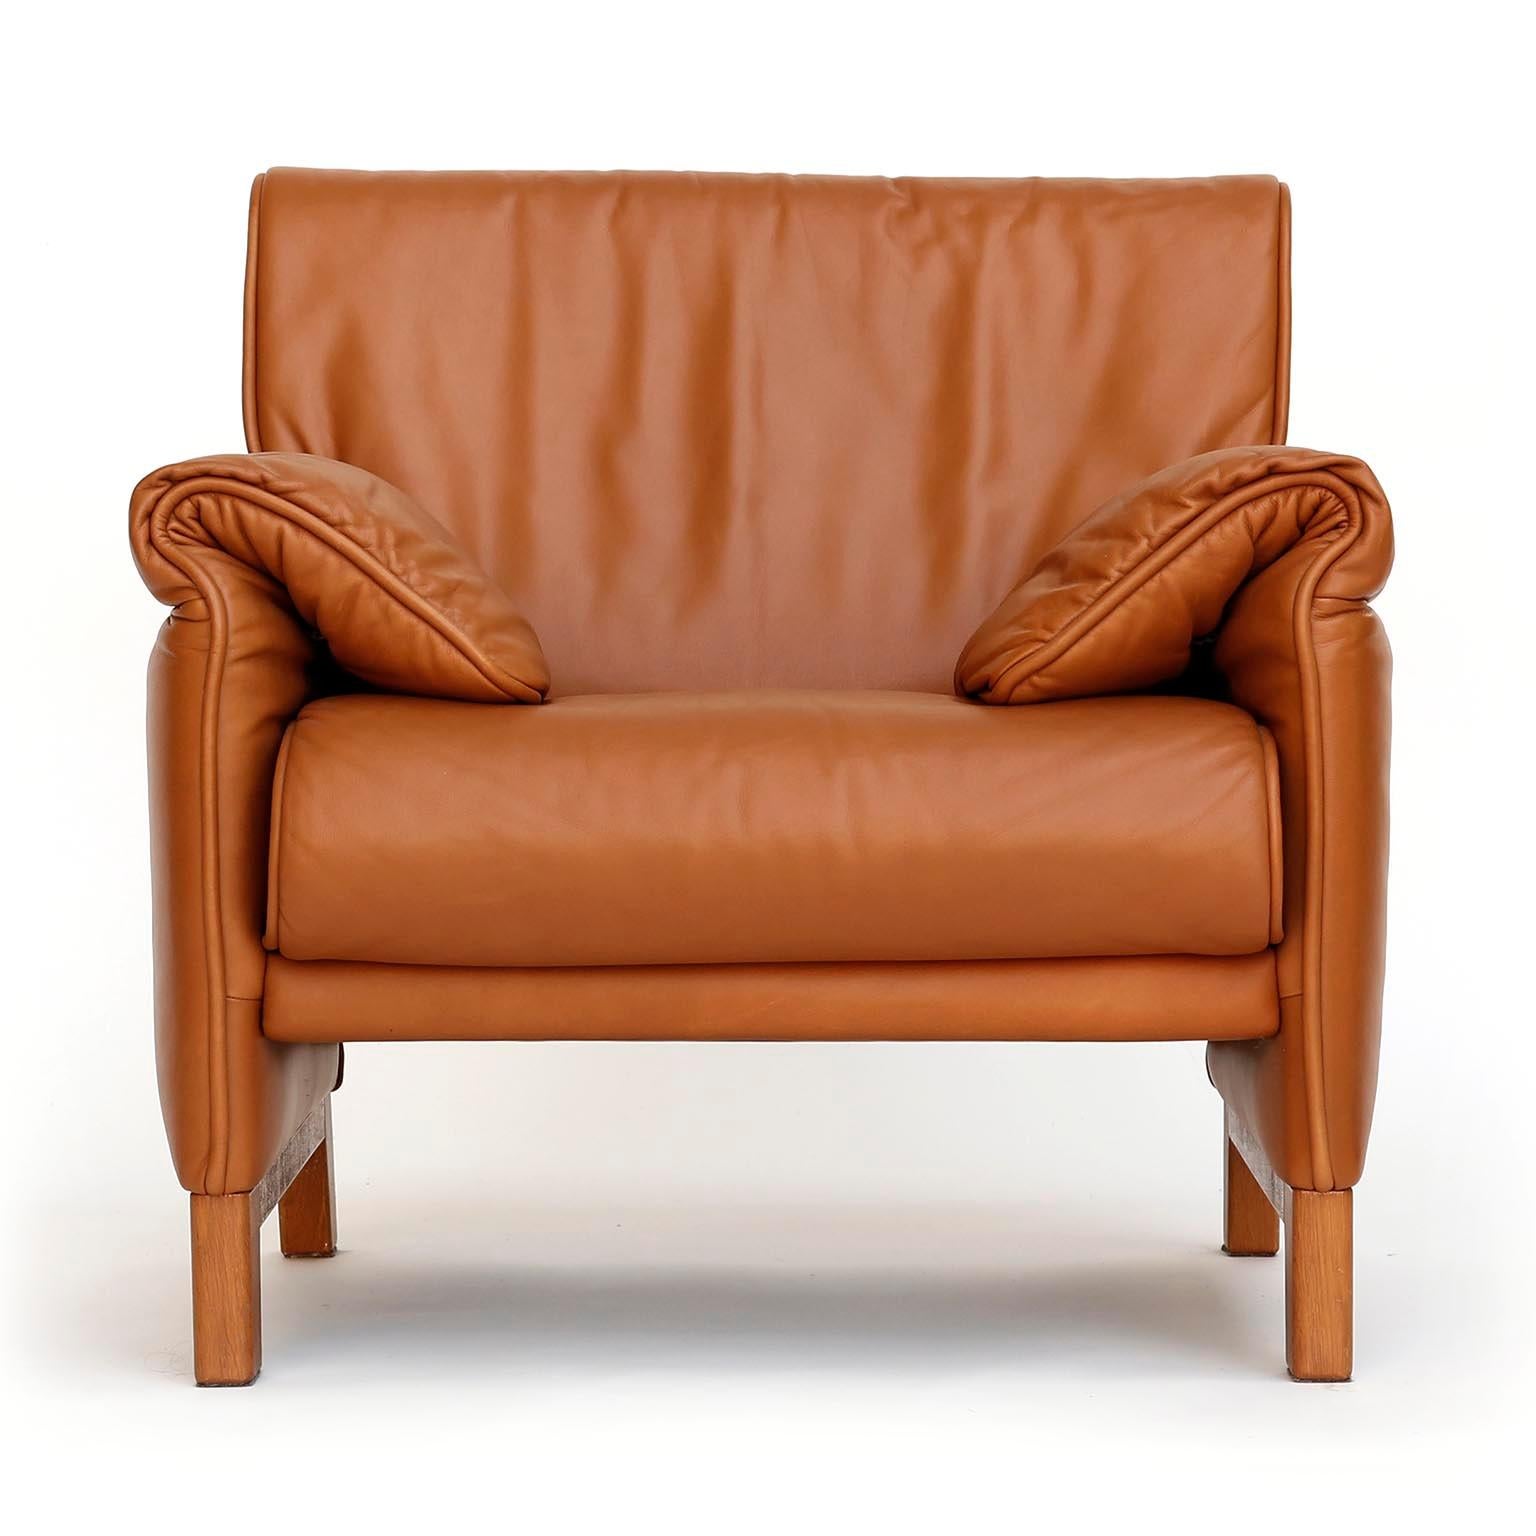 Four De Sede 'DS-14' Armchairs Lounge Chairs, Cognac Leather Teak, 1989 In Excellent Condition For Sale In Hausmannstätten, AT